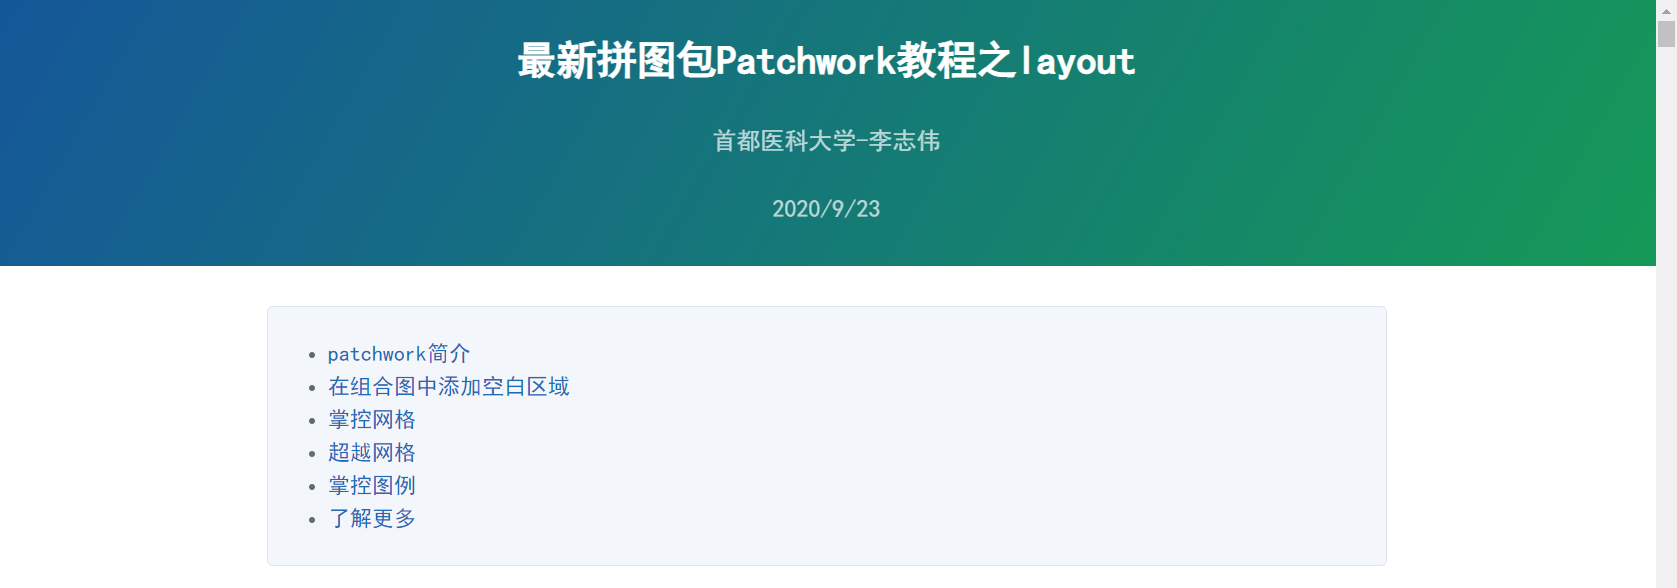 patchwork包中文教程-李志伟